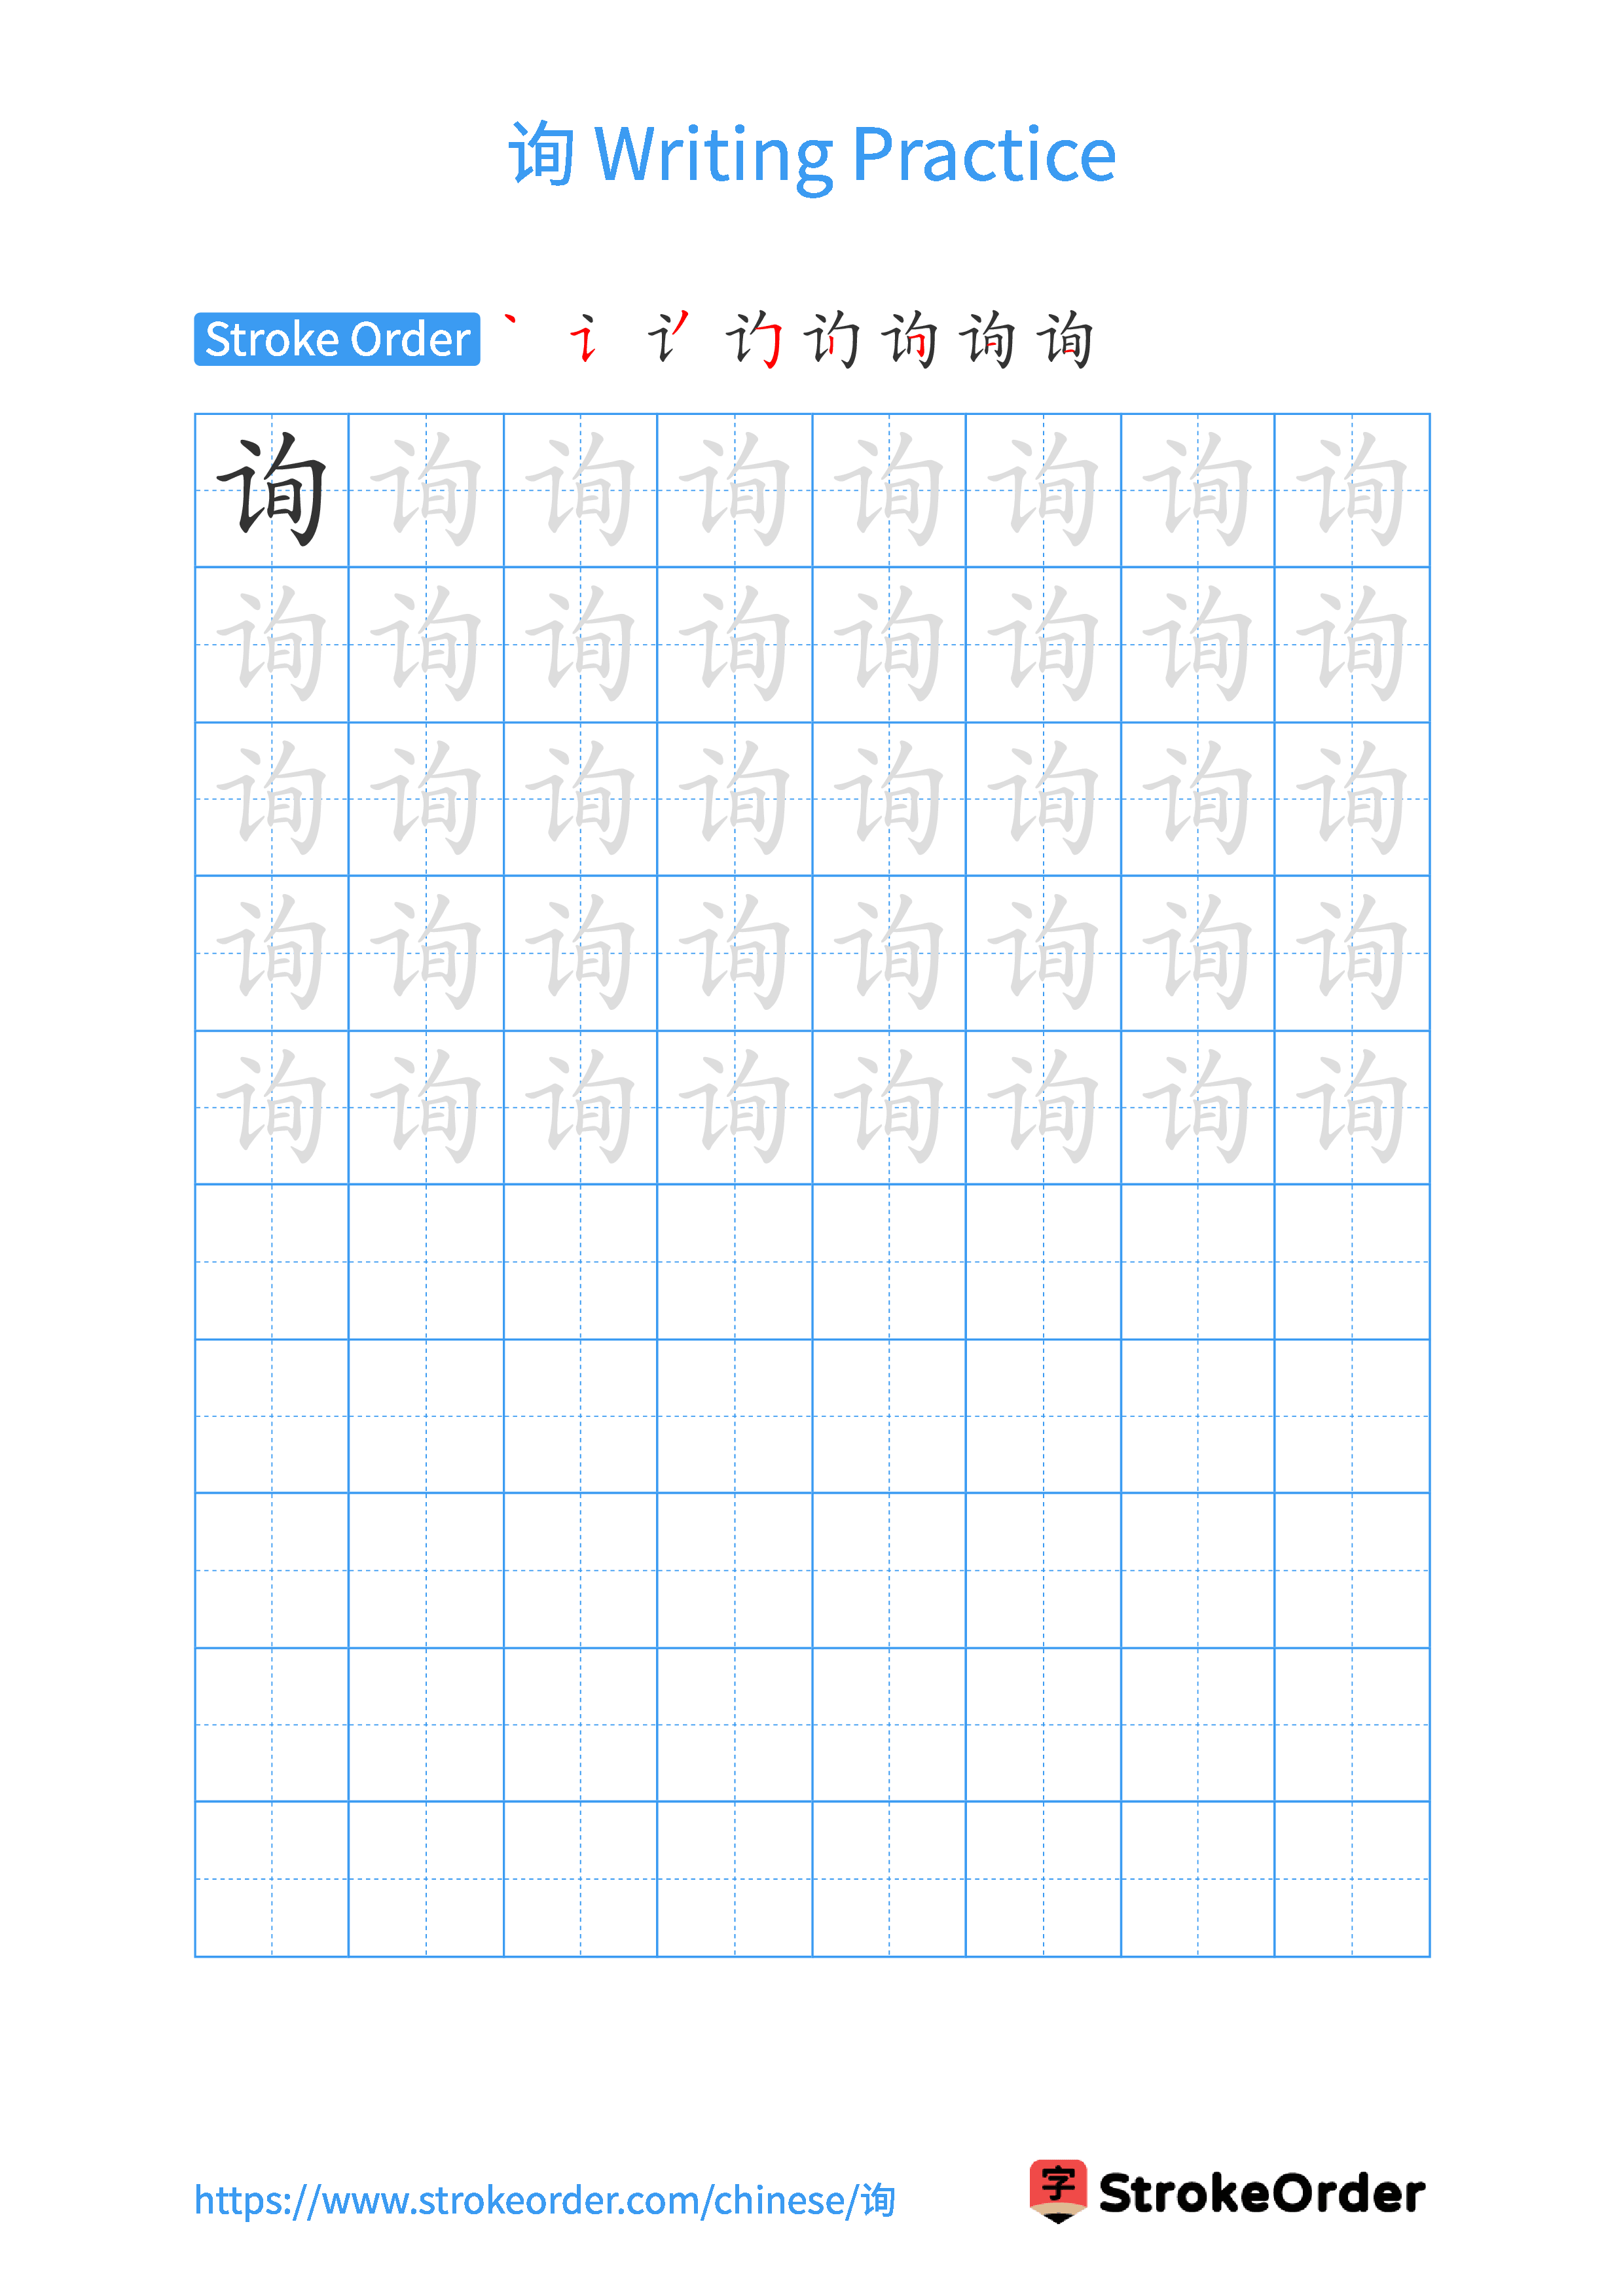 Printable Handwriting Practice Worksheet of the Chinese character 询 in Portrait Orientation (Tian Zi Ge)